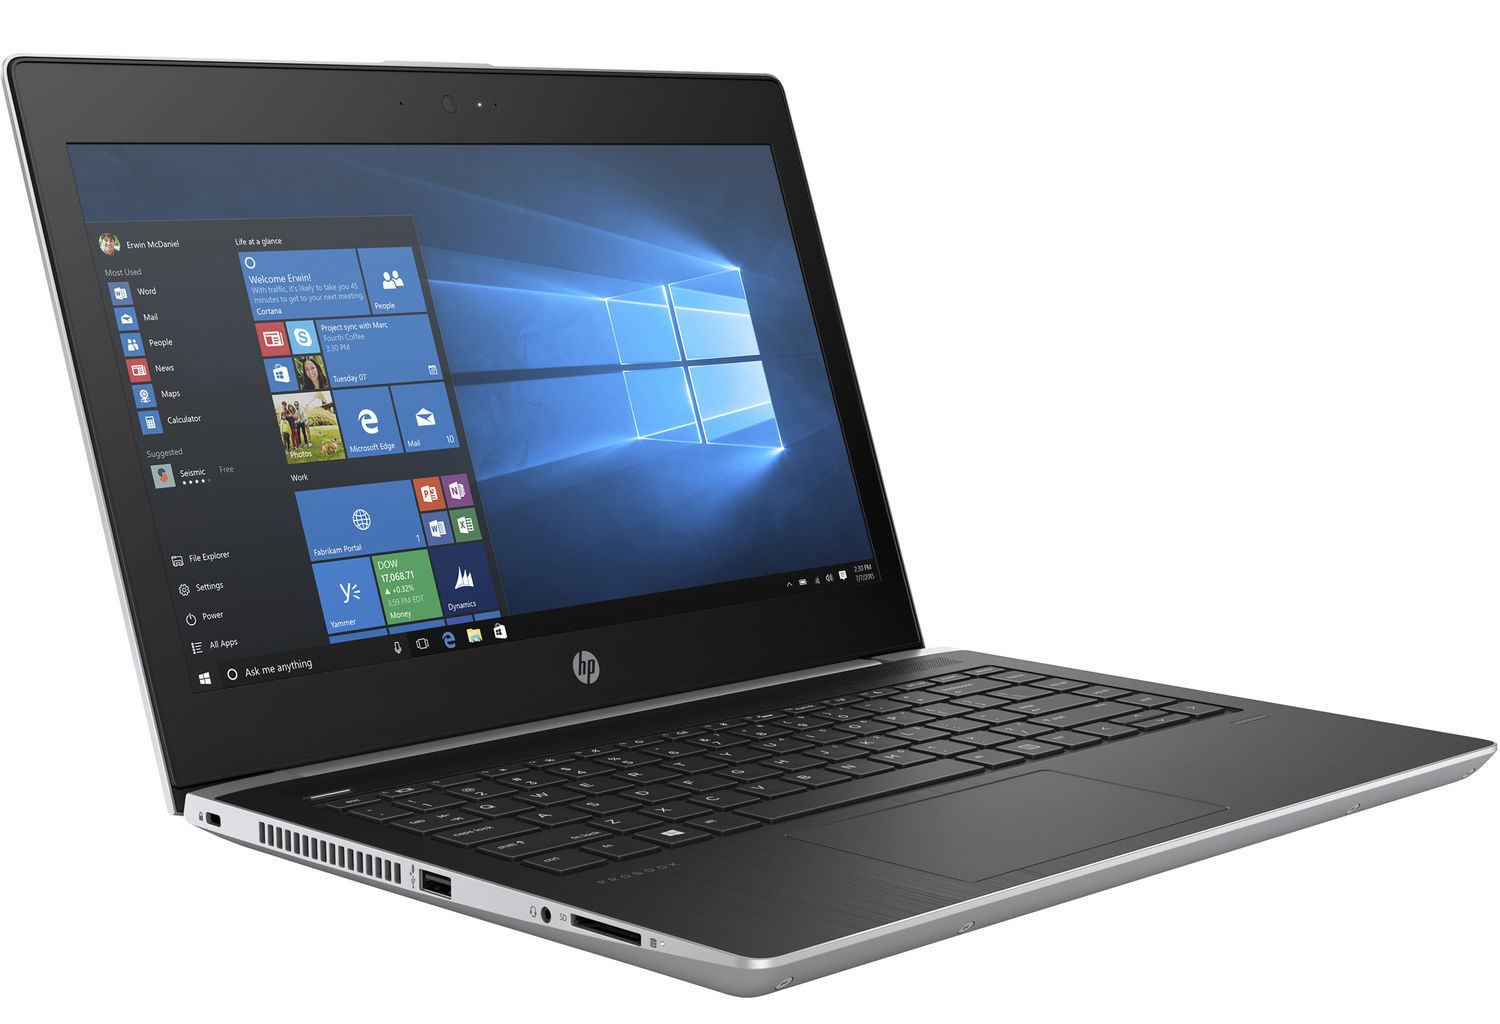 HP ProBook 430 G5 - Specs, Tests, and Prices | LaptopMedia.com